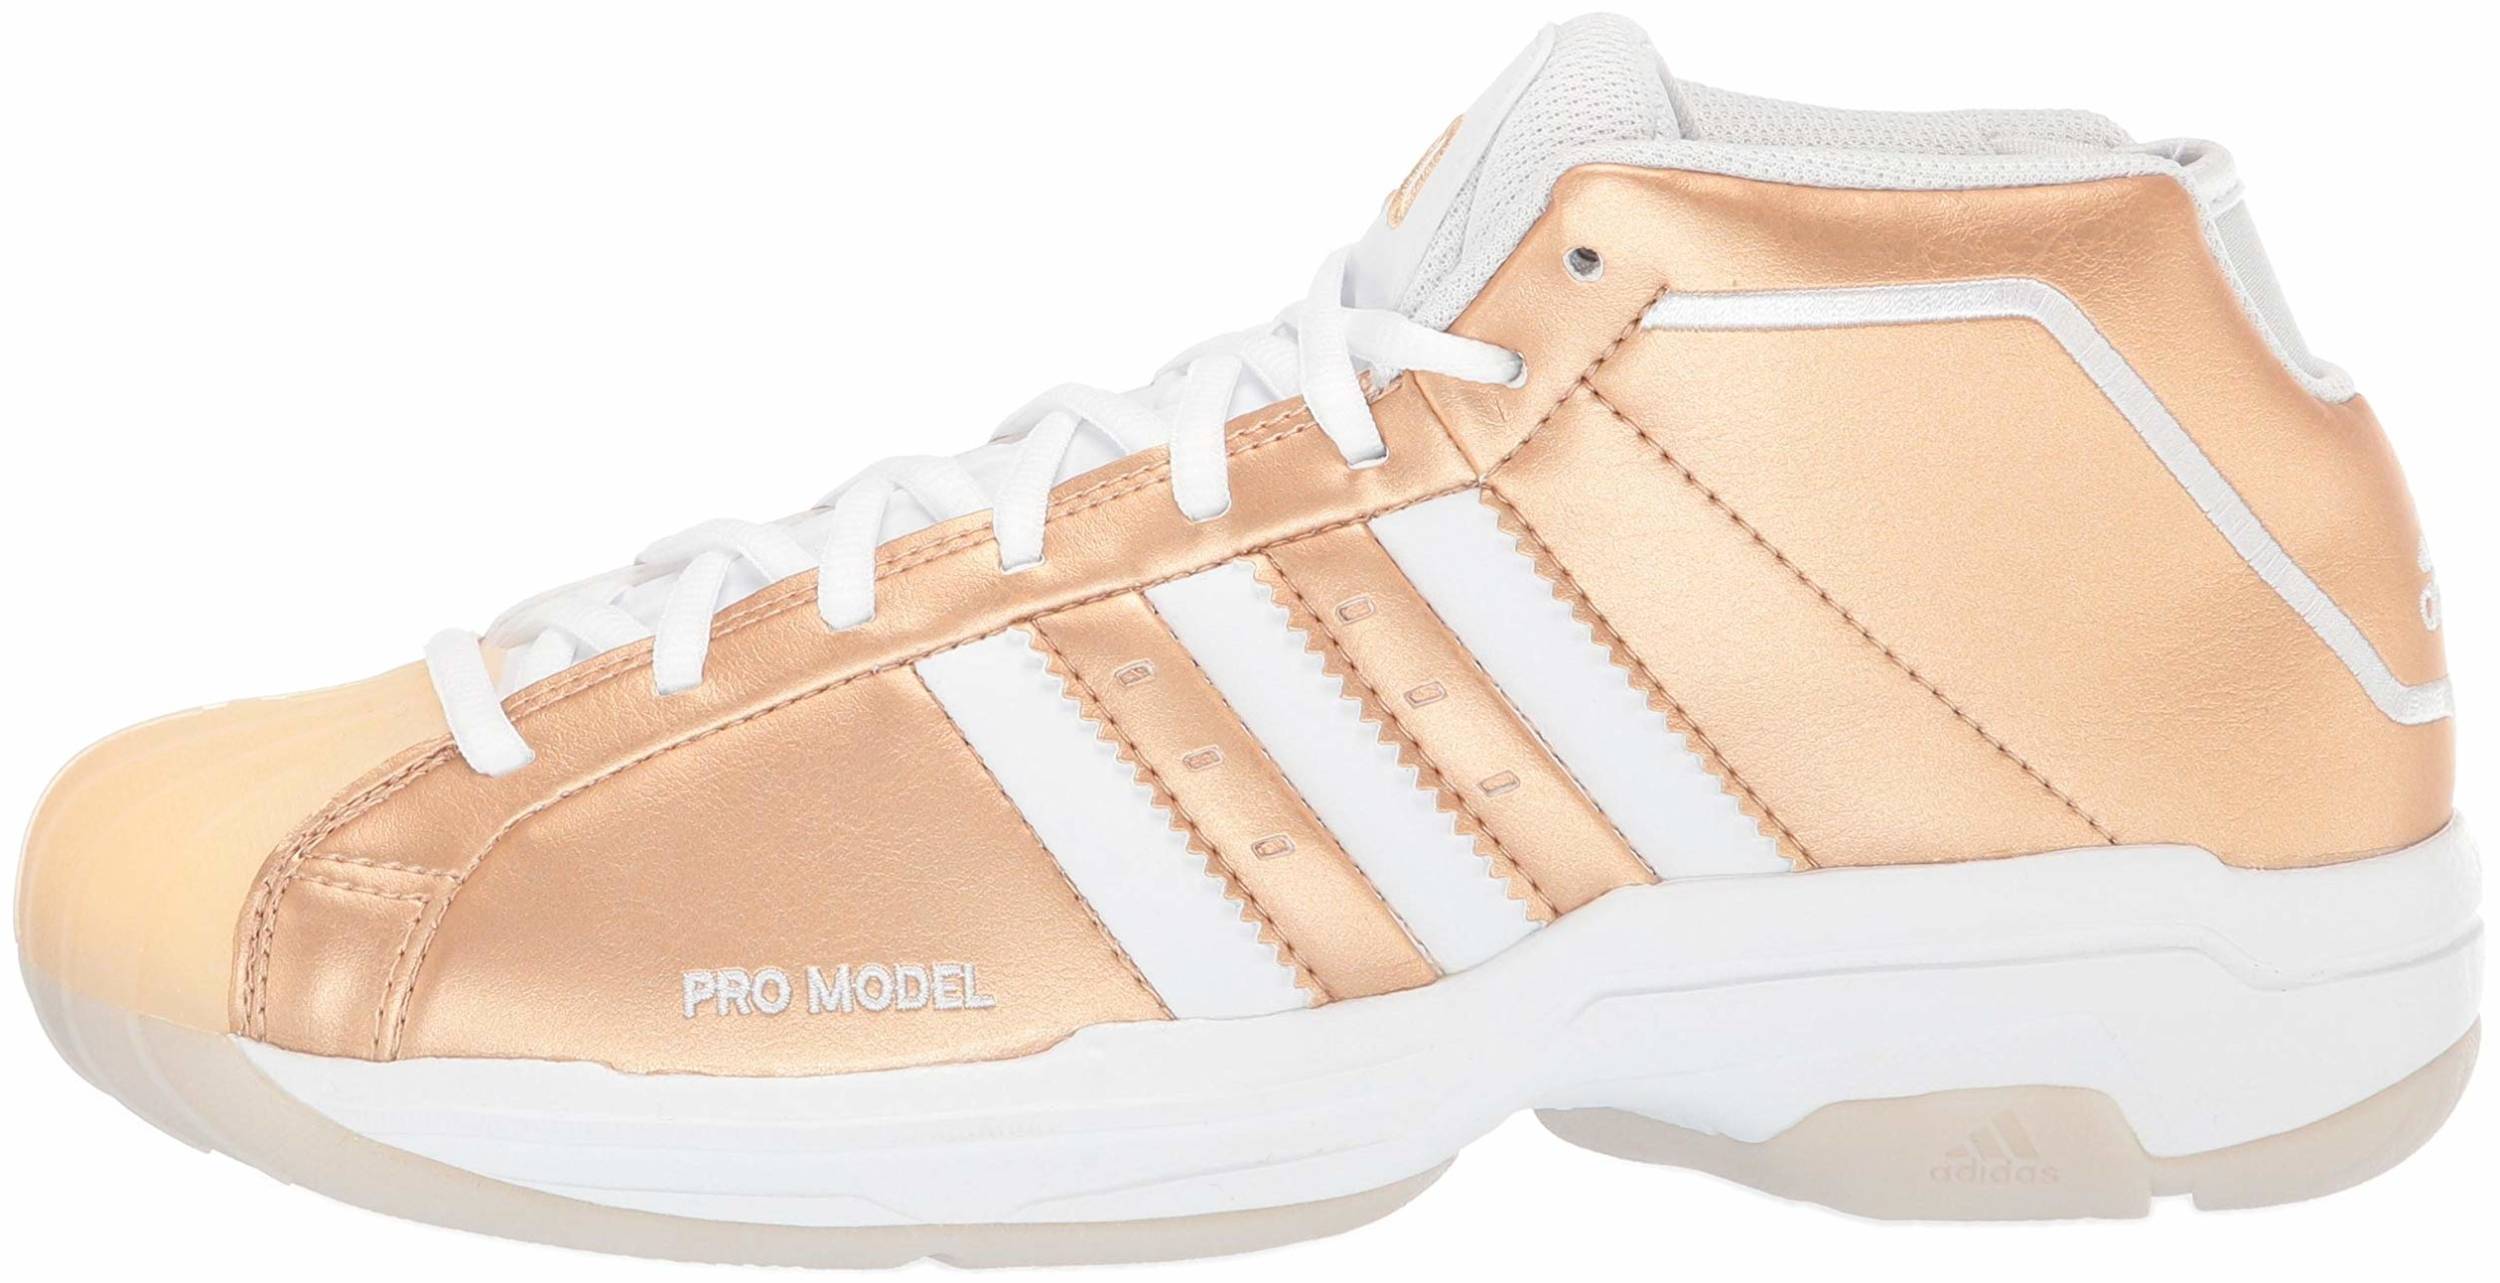 adidas basketball shoes pink